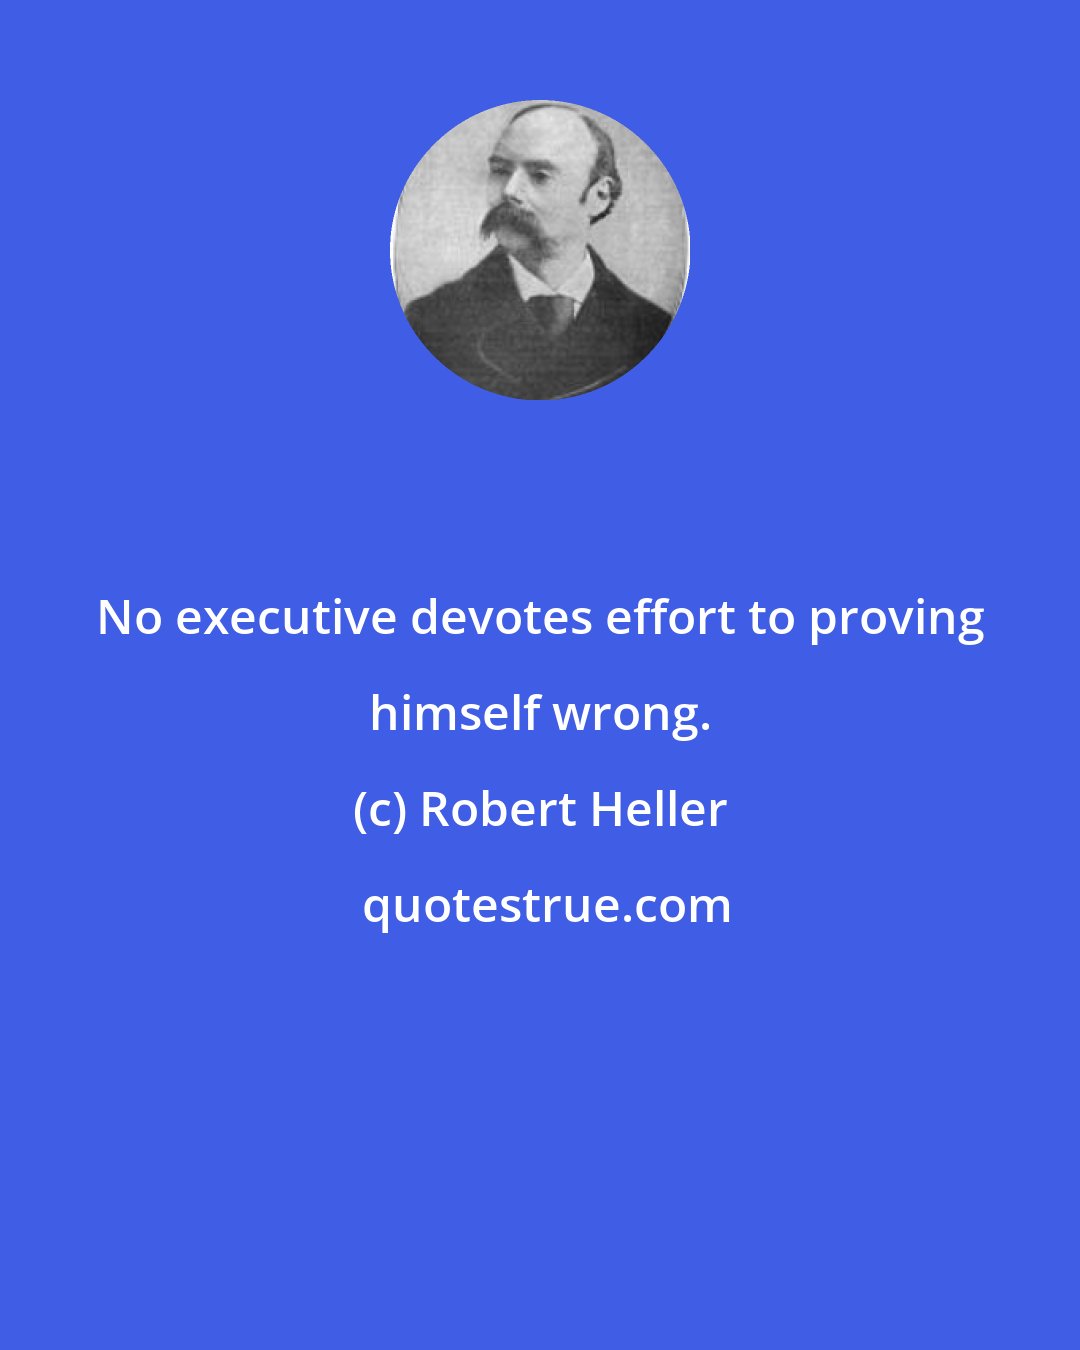 Robert Heller: No executive devotes effort to proving himself wrong.